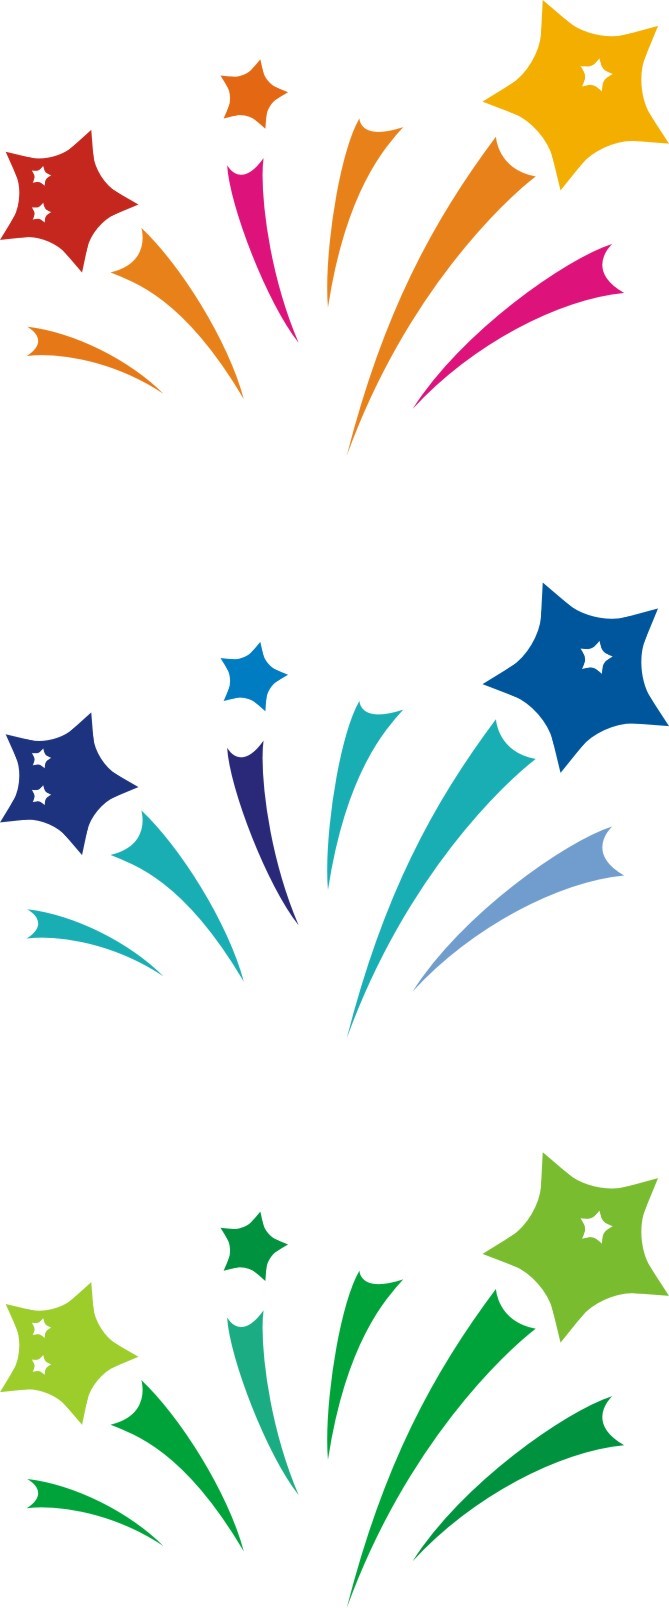 Shooting star illustrator vector source file | Logo & Graphic Design